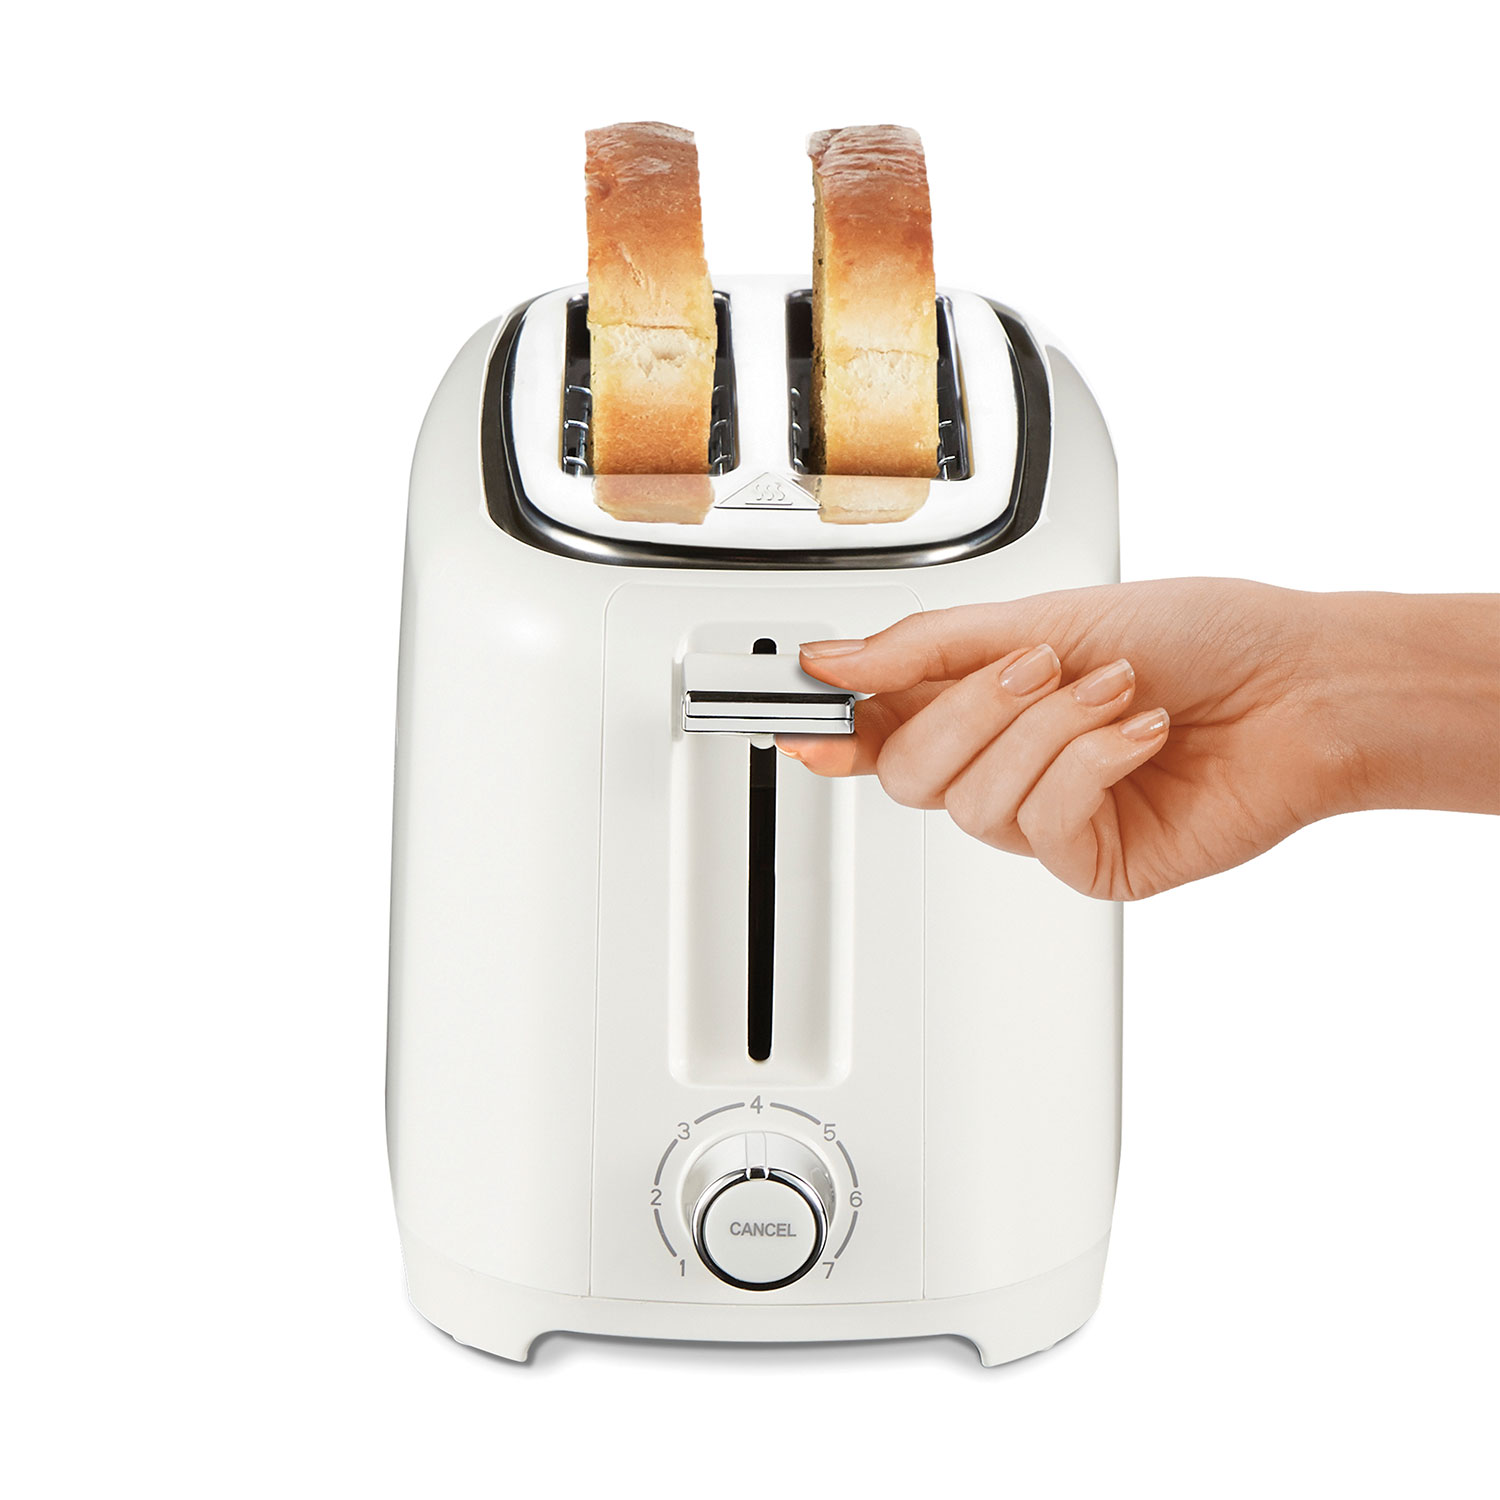 Hamilton Beach 4 Slice Toaster with Extra-Wide Slots, White- 24218